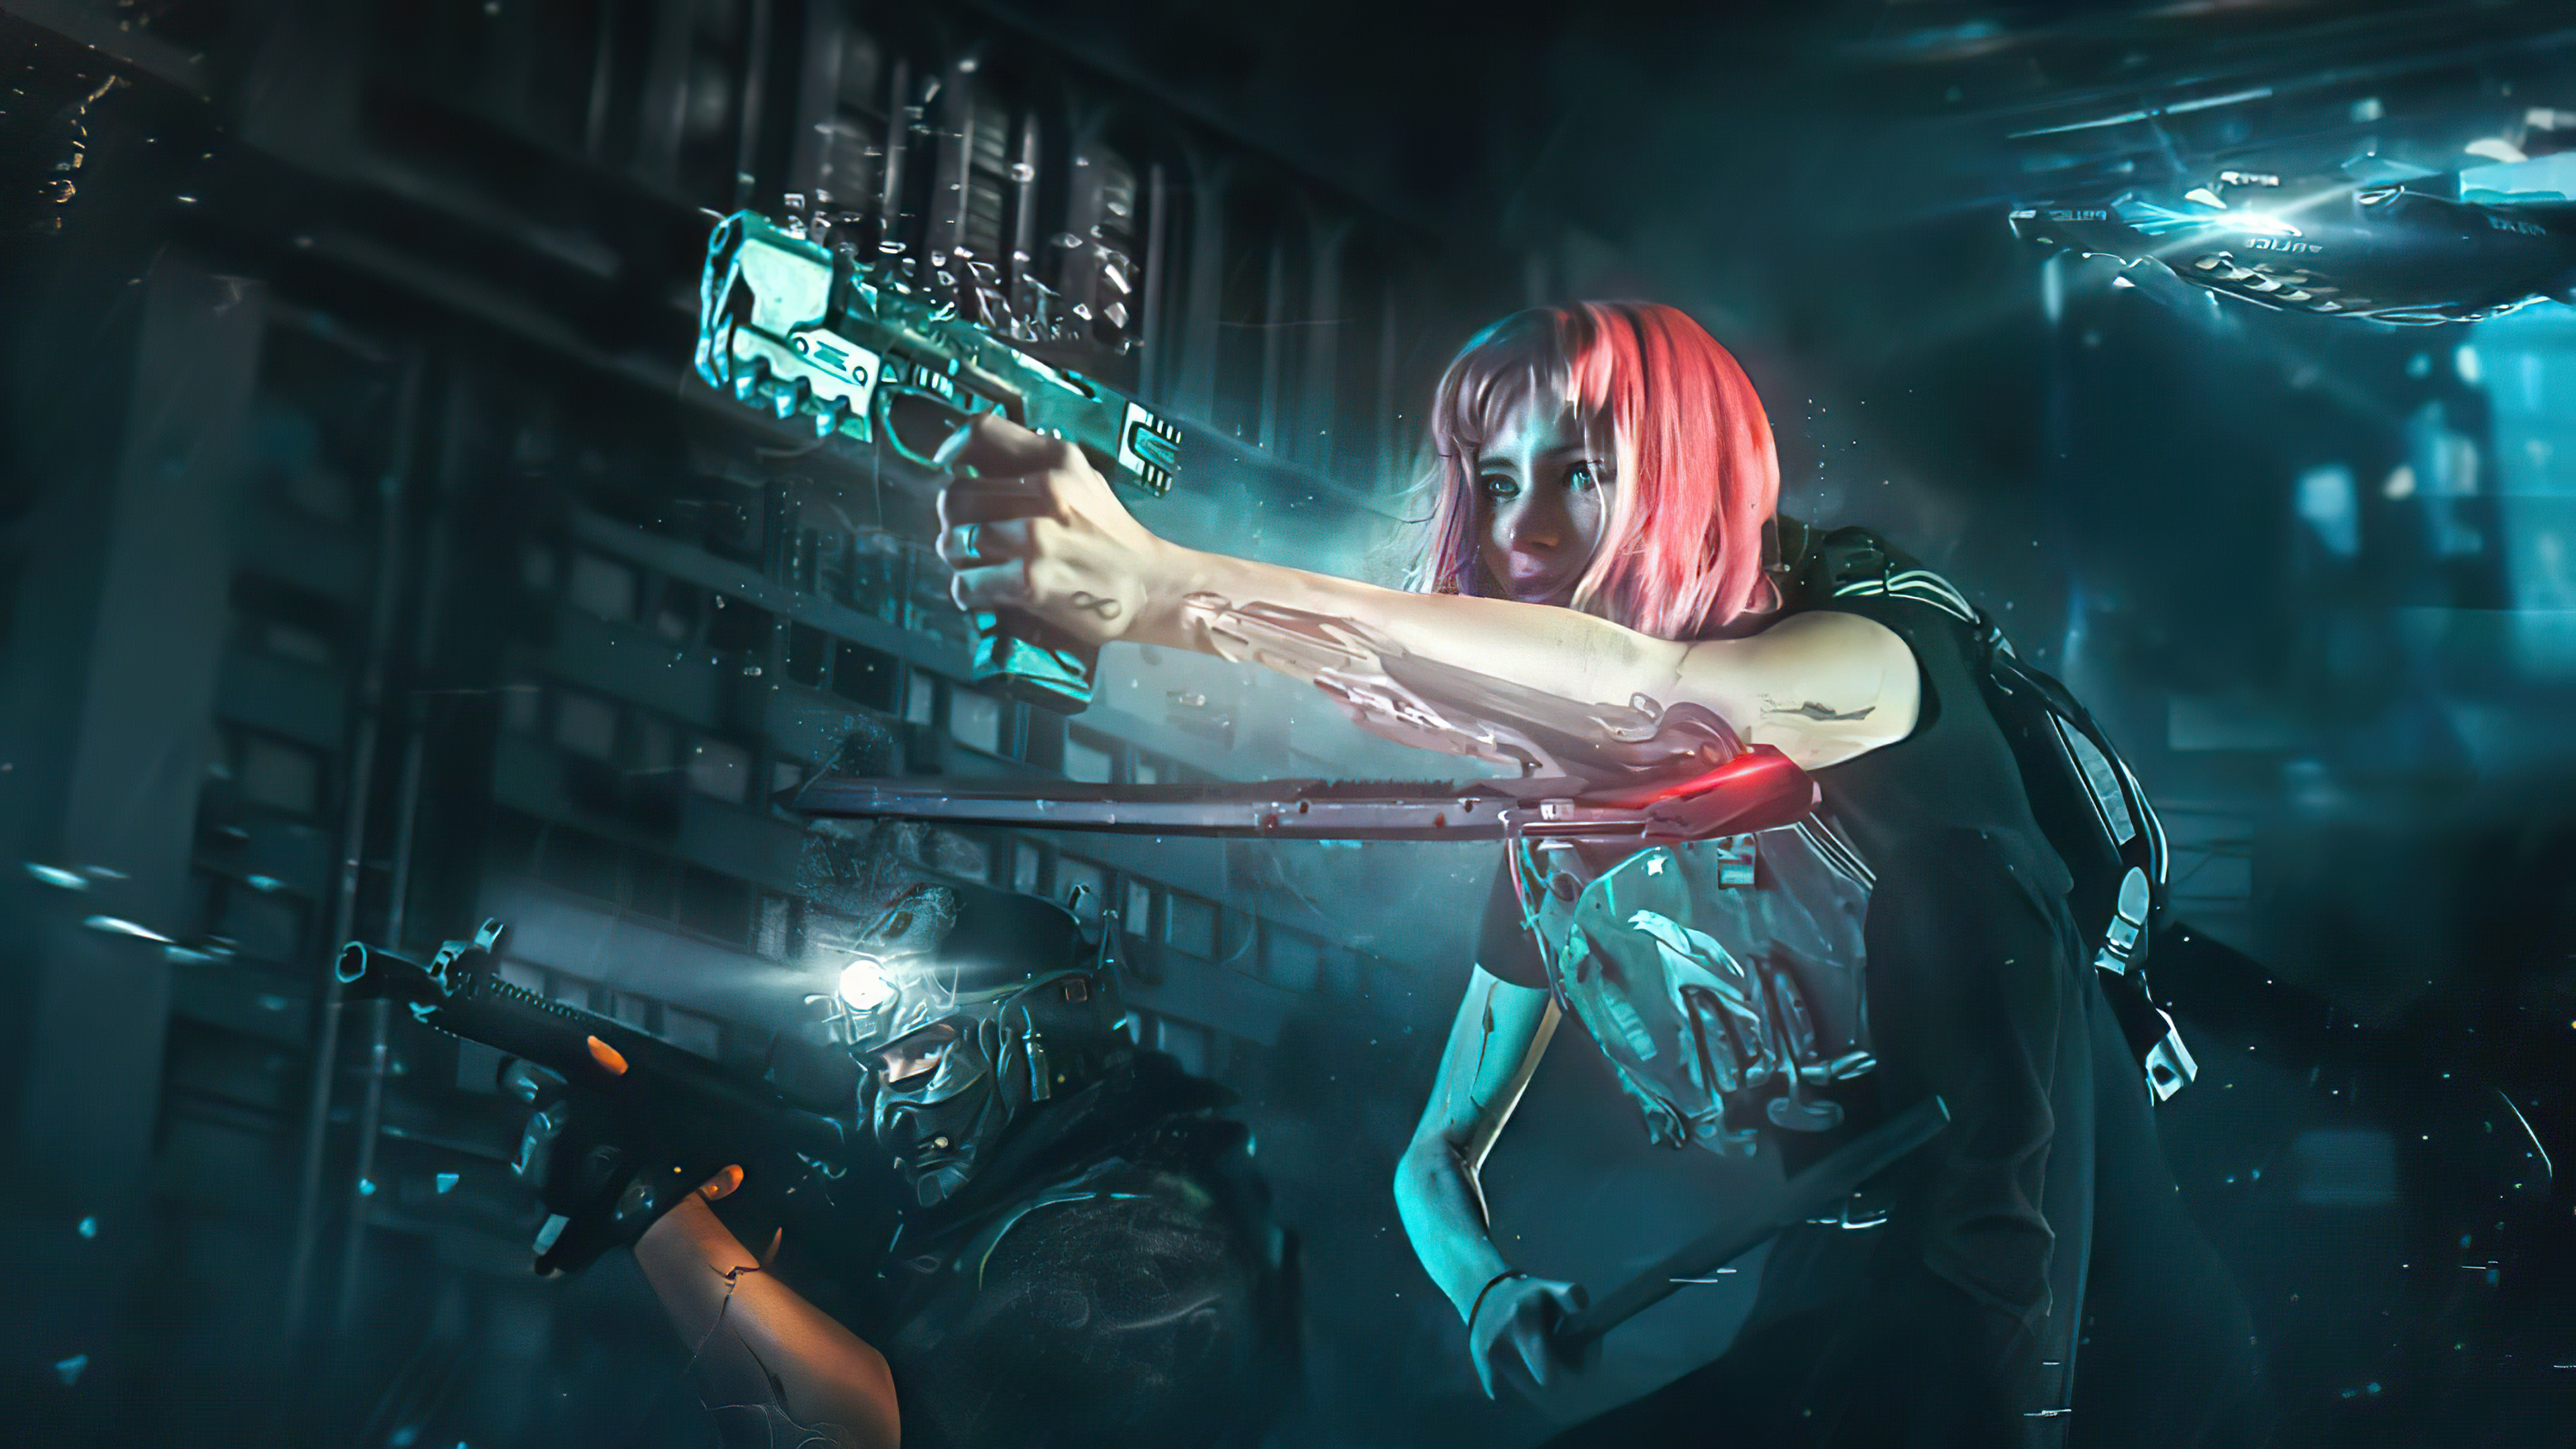 Video Game Cyberpunk 2077 4k Ultra HD Wallpaper by Natty Dread